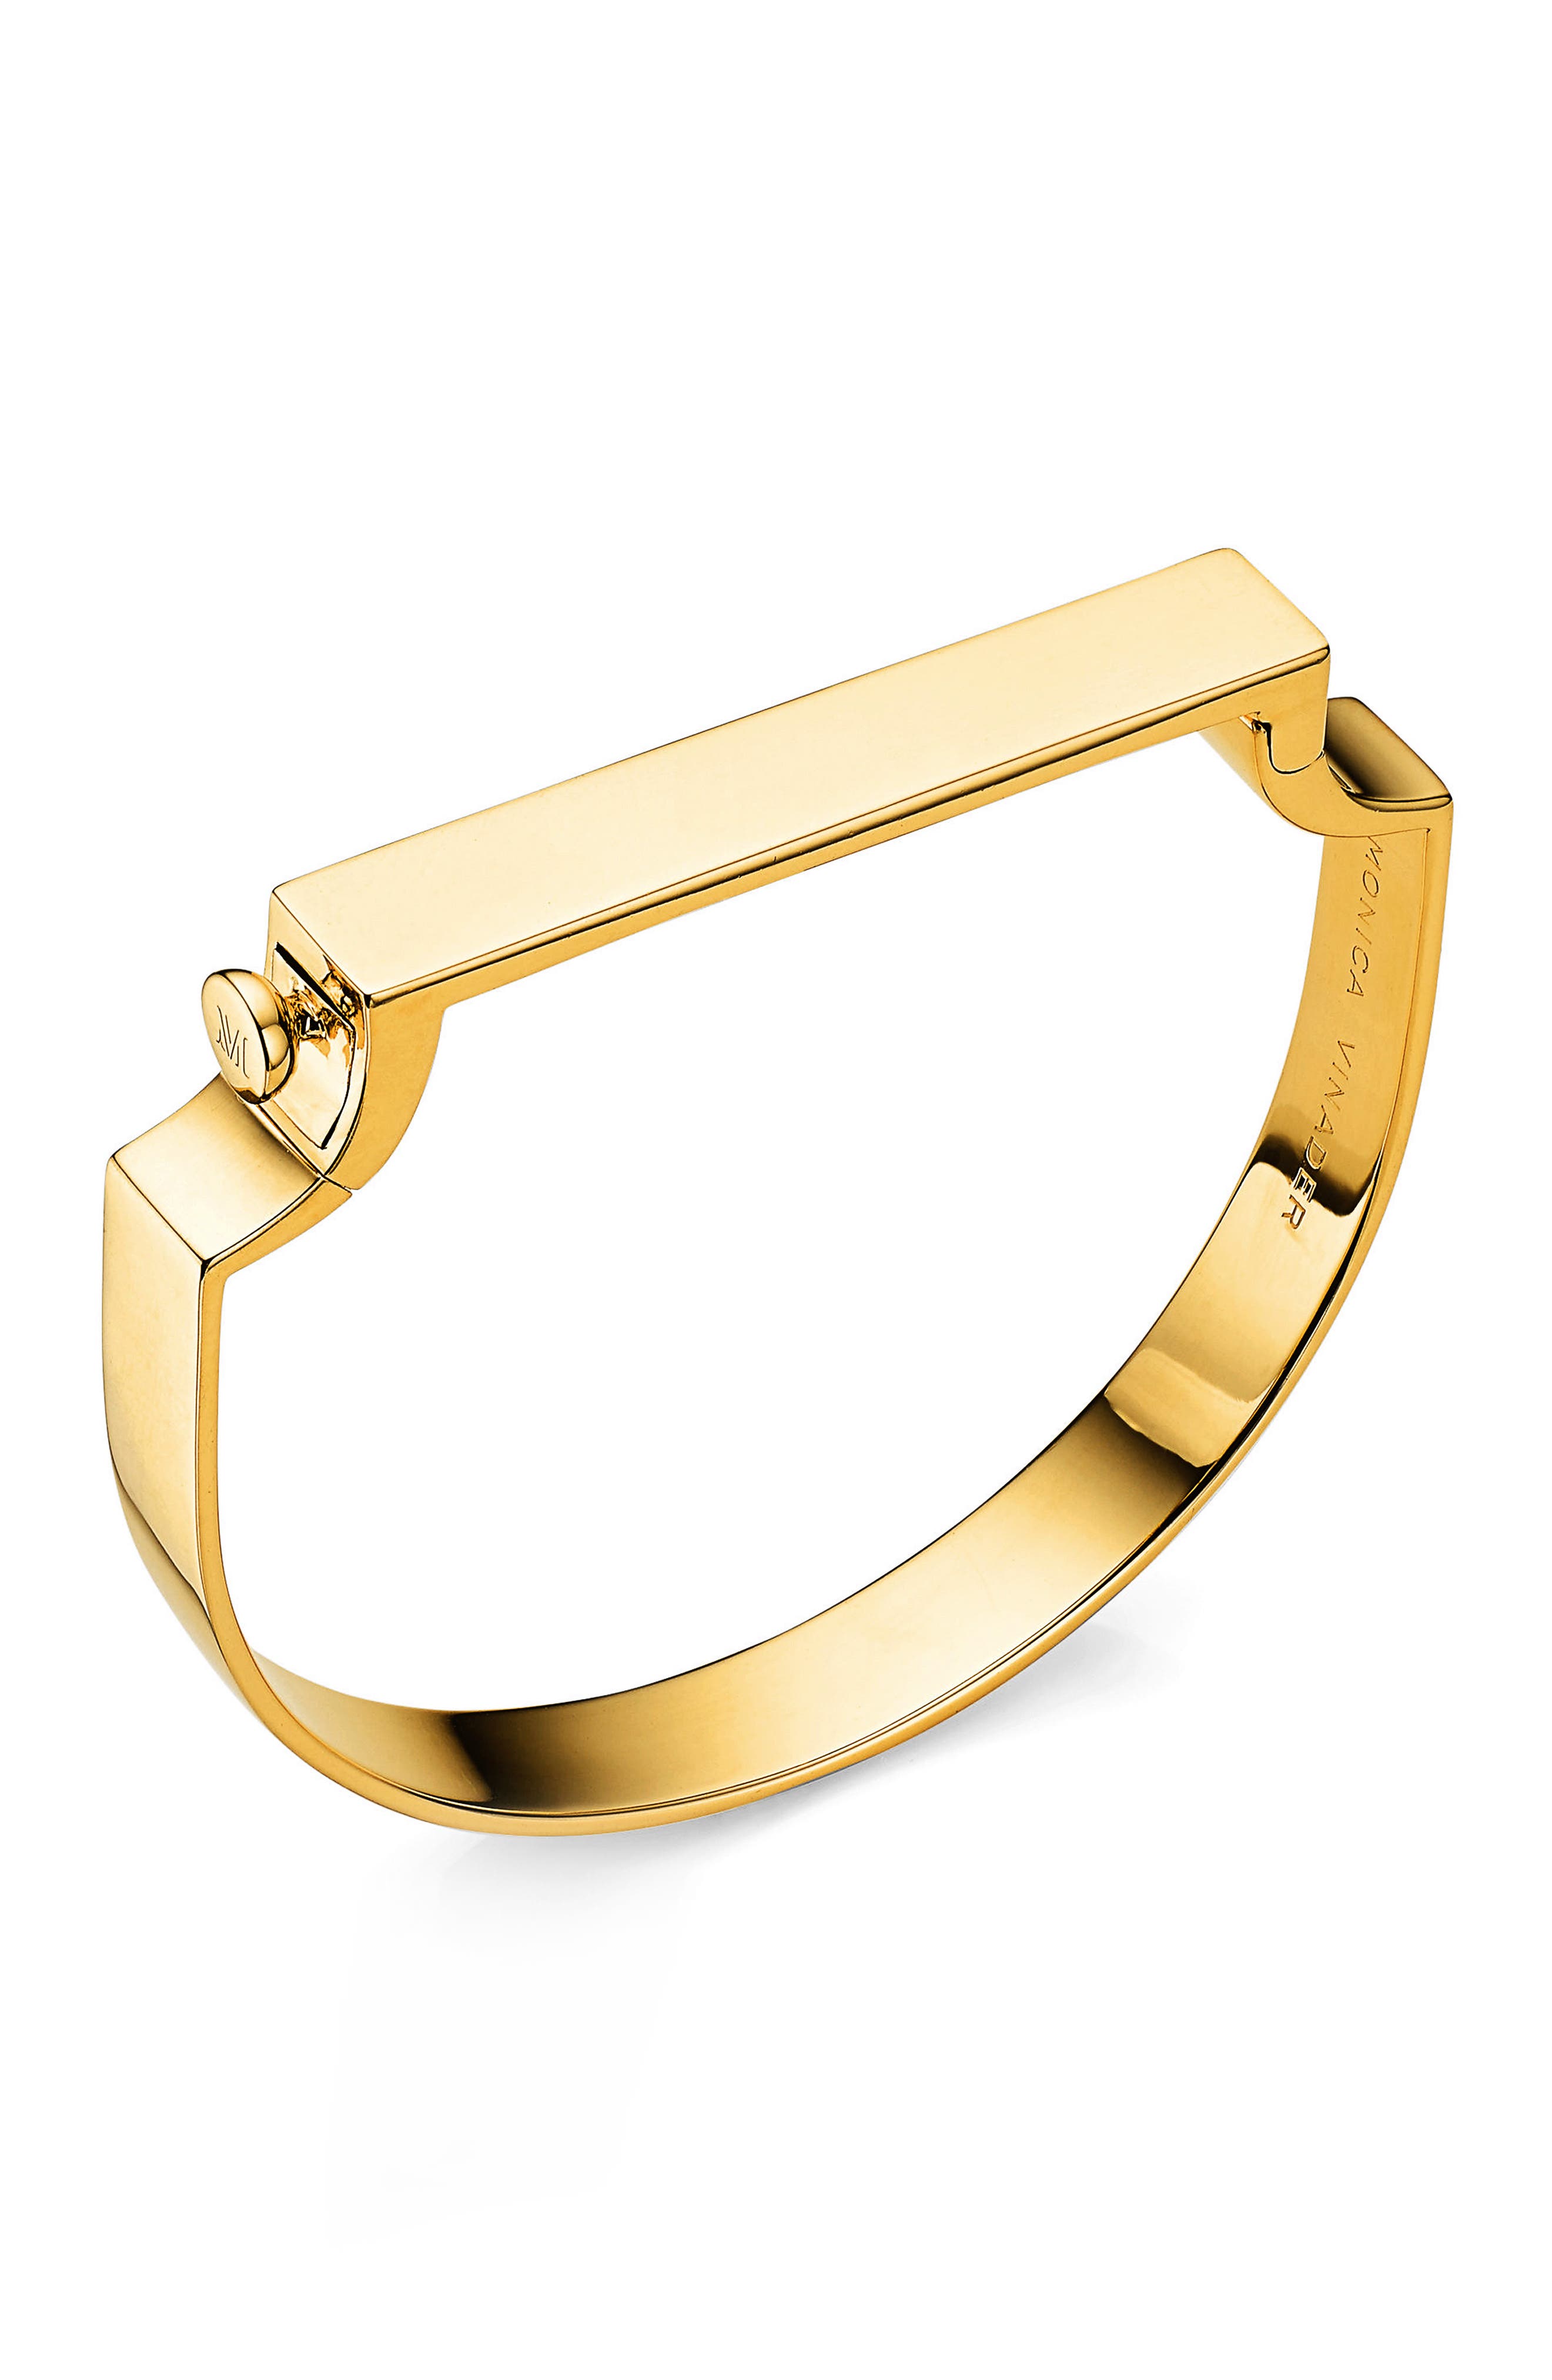 Gold Signature Bangle Monica Vinader Accessories Jewelry Bracelets 